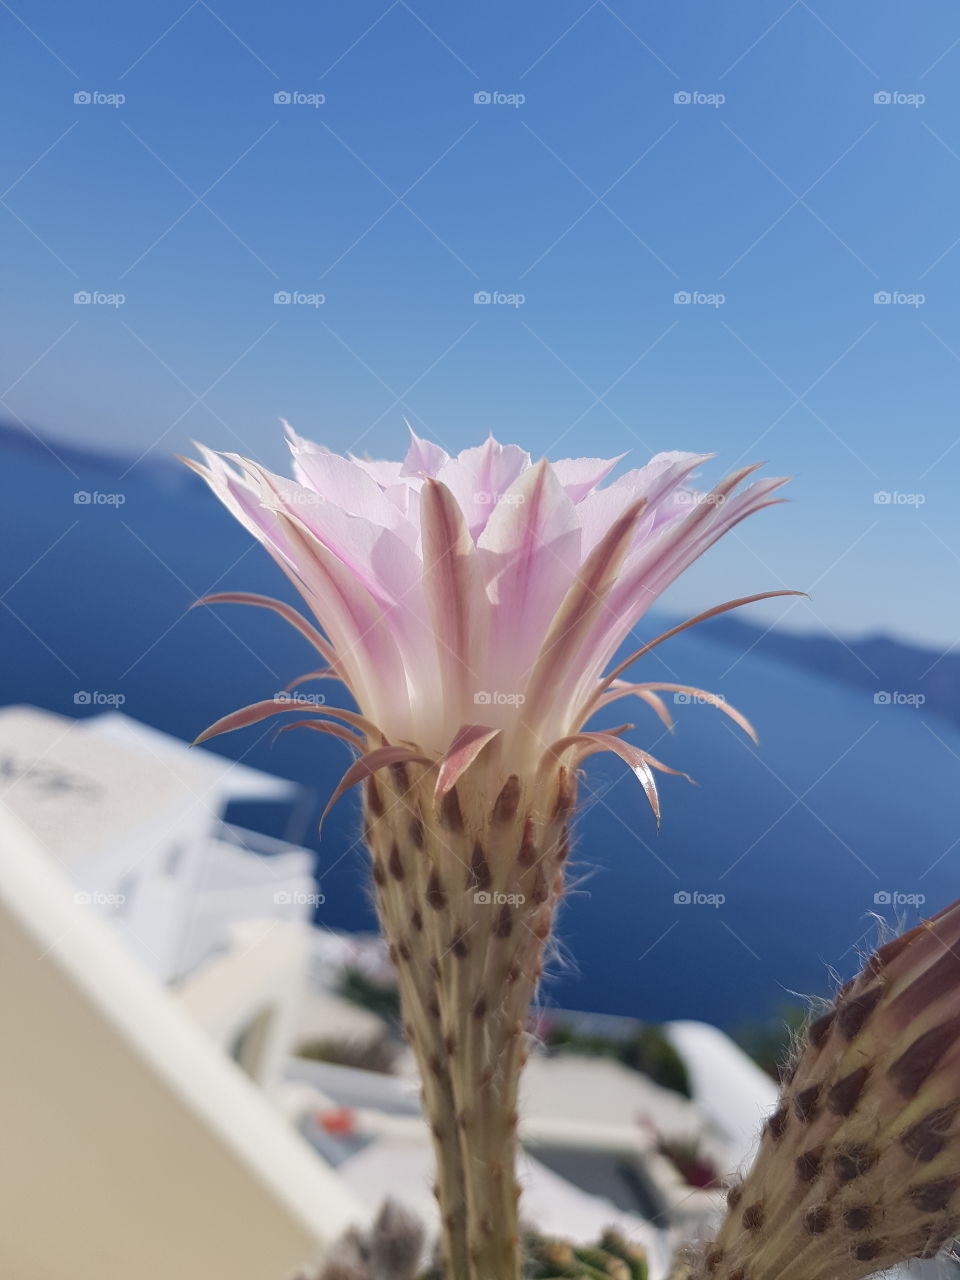 Lotus flower overlooking Caldera in Santorini